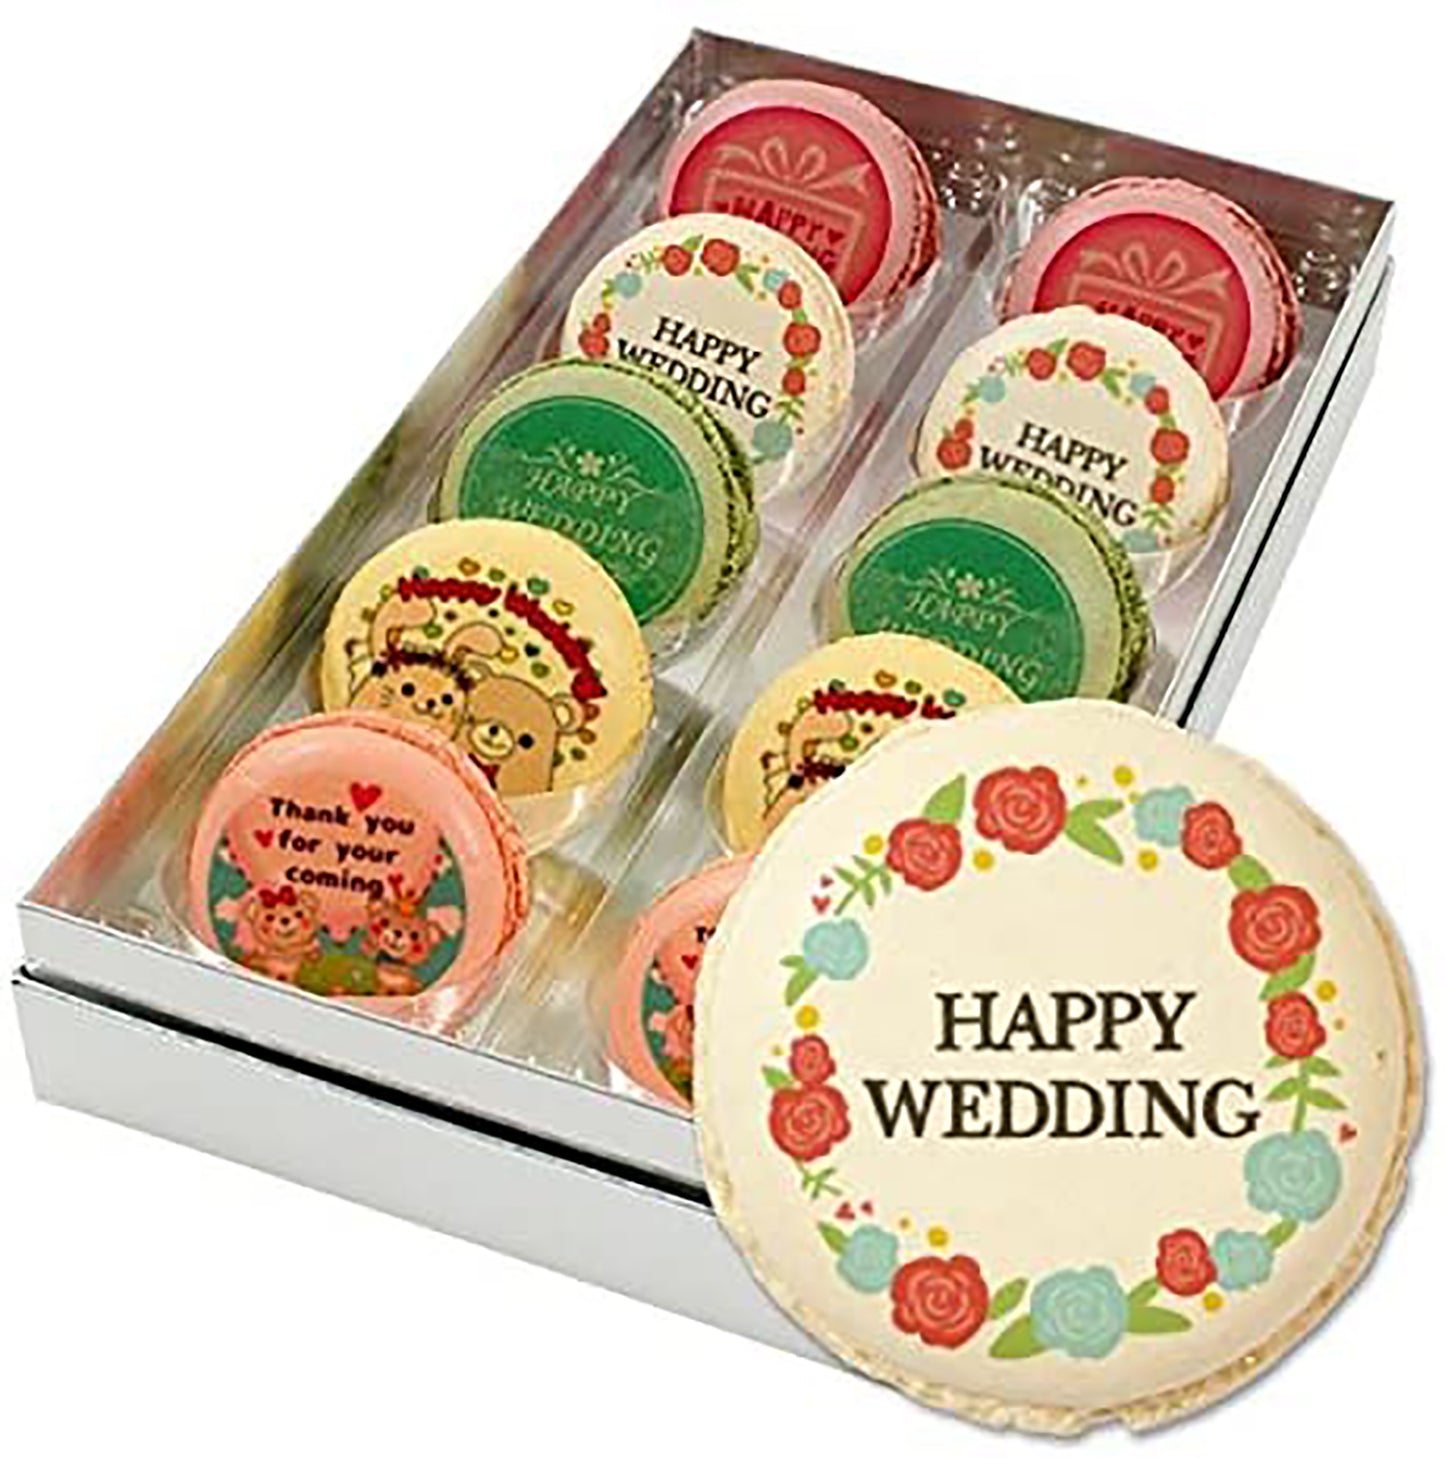 Happy wedding / assorted macarons 10ps